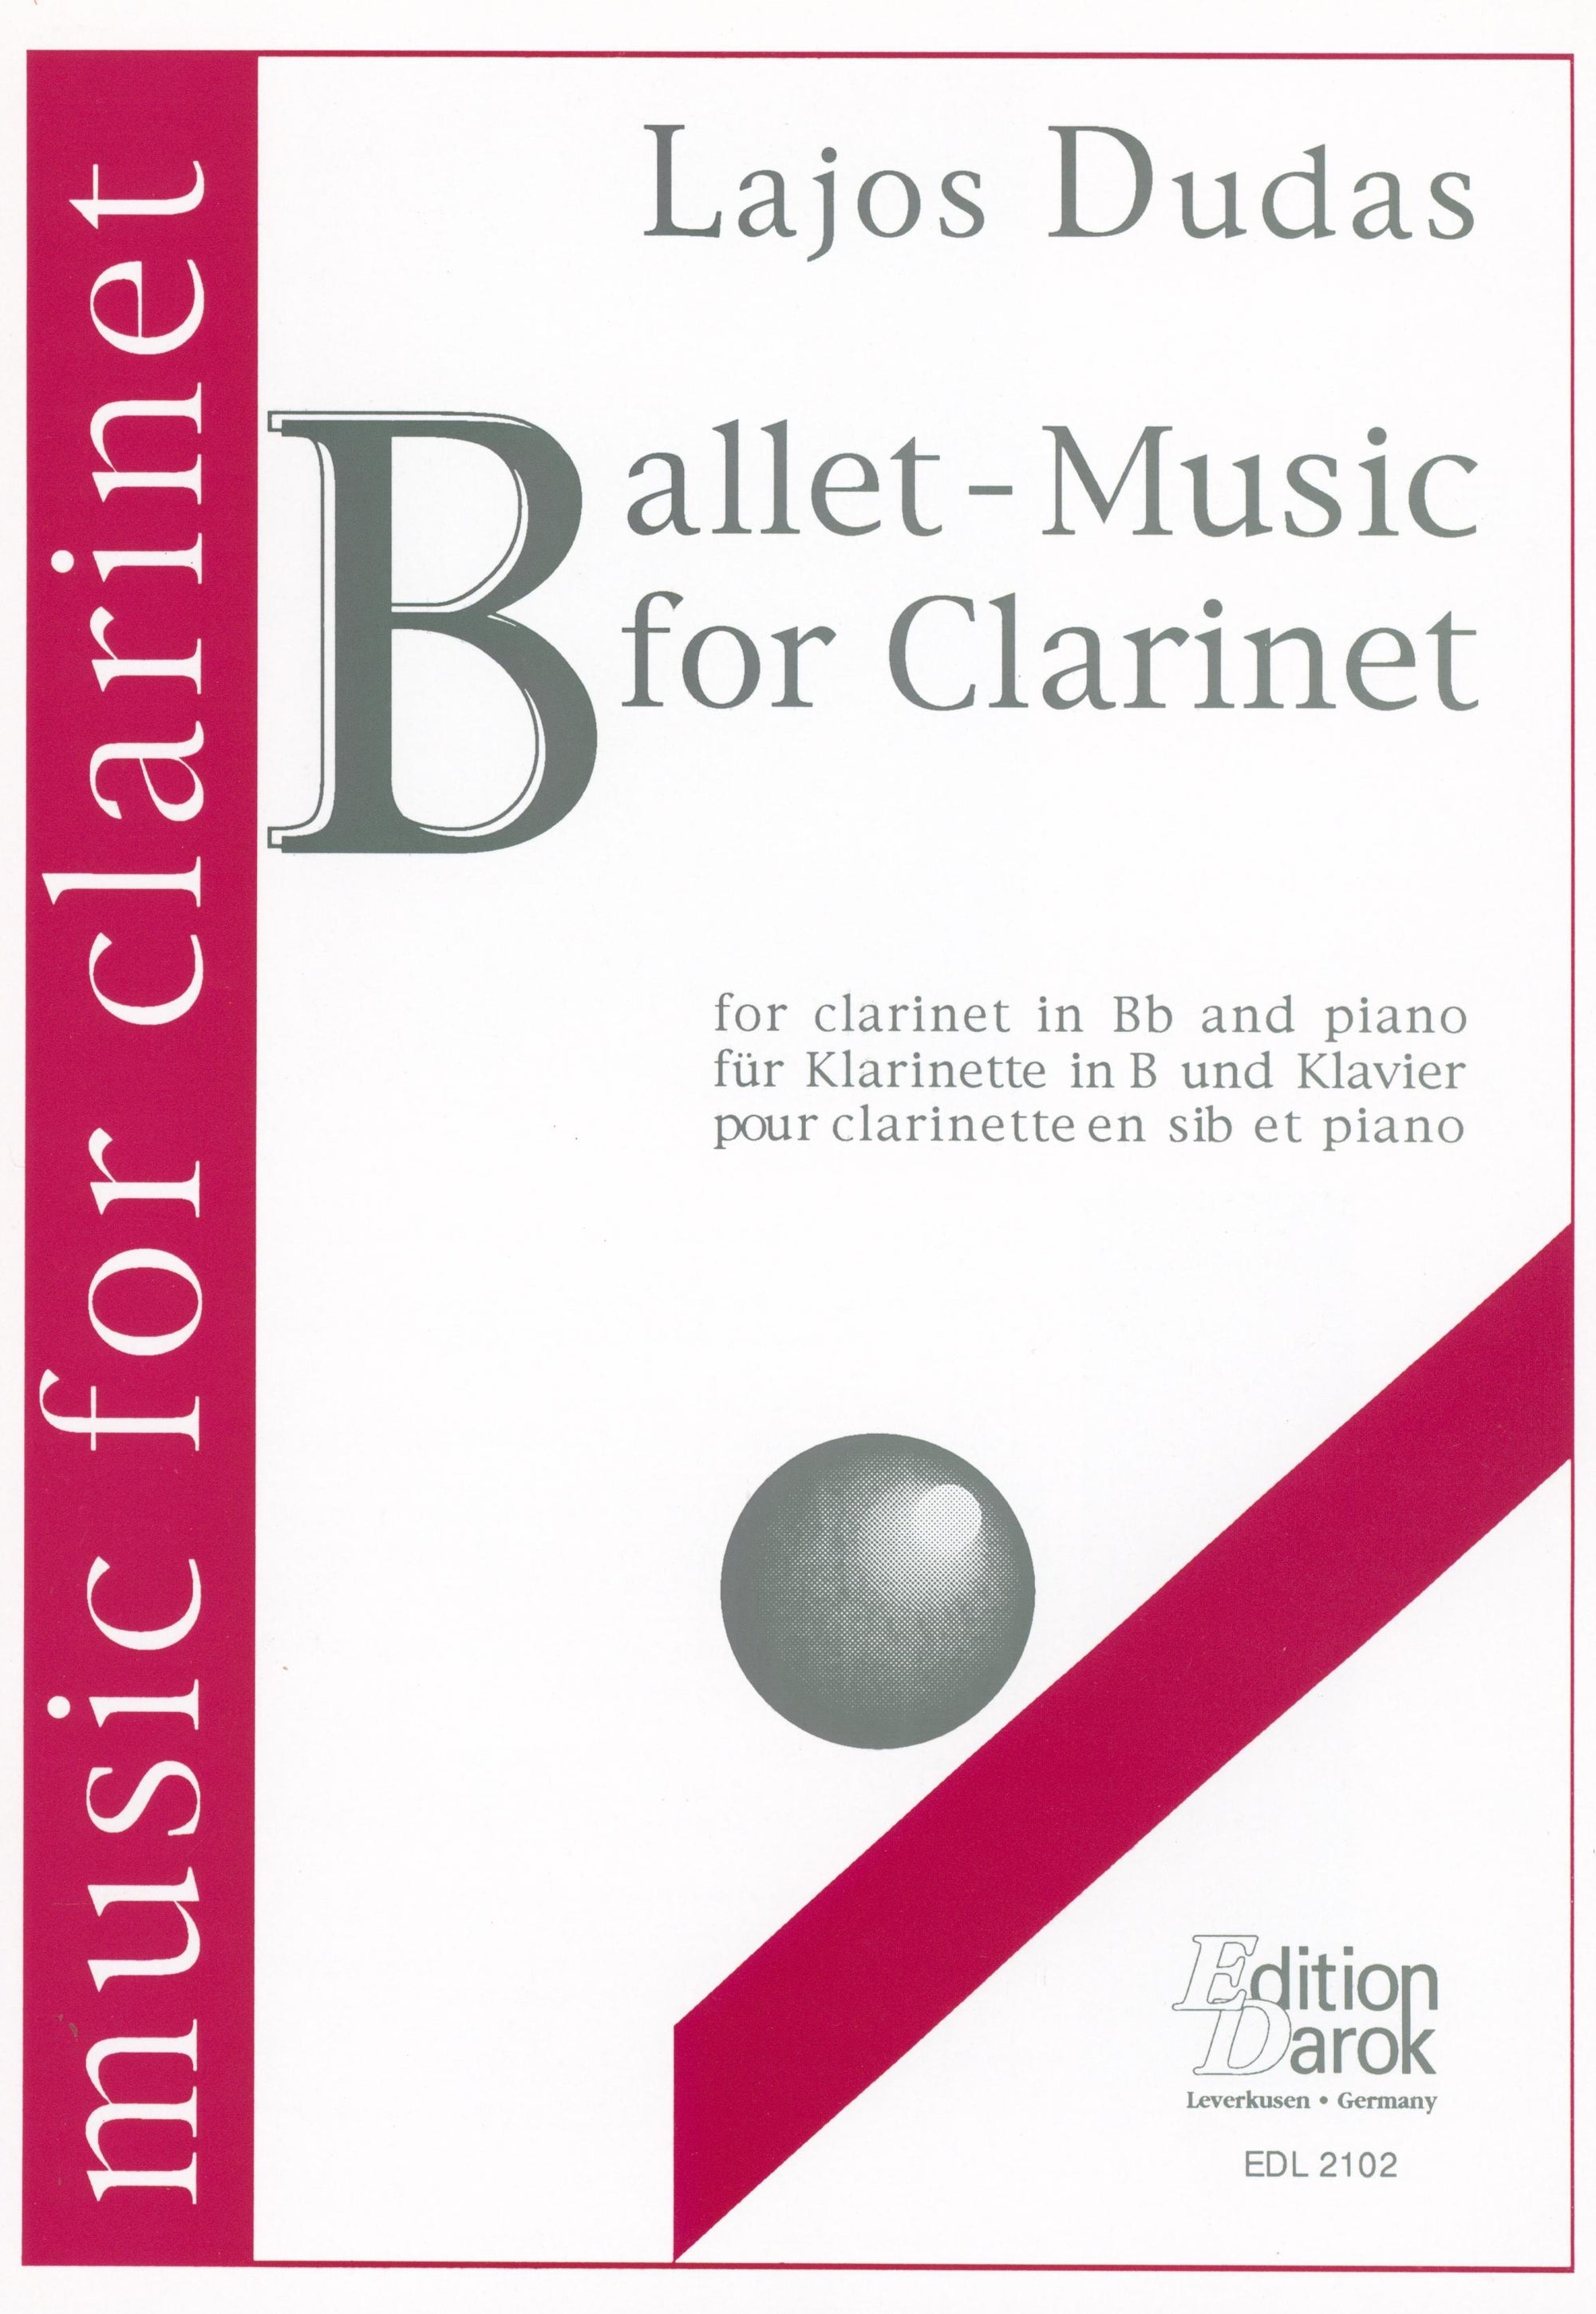 Dudas: Ballet Music for Clarinet